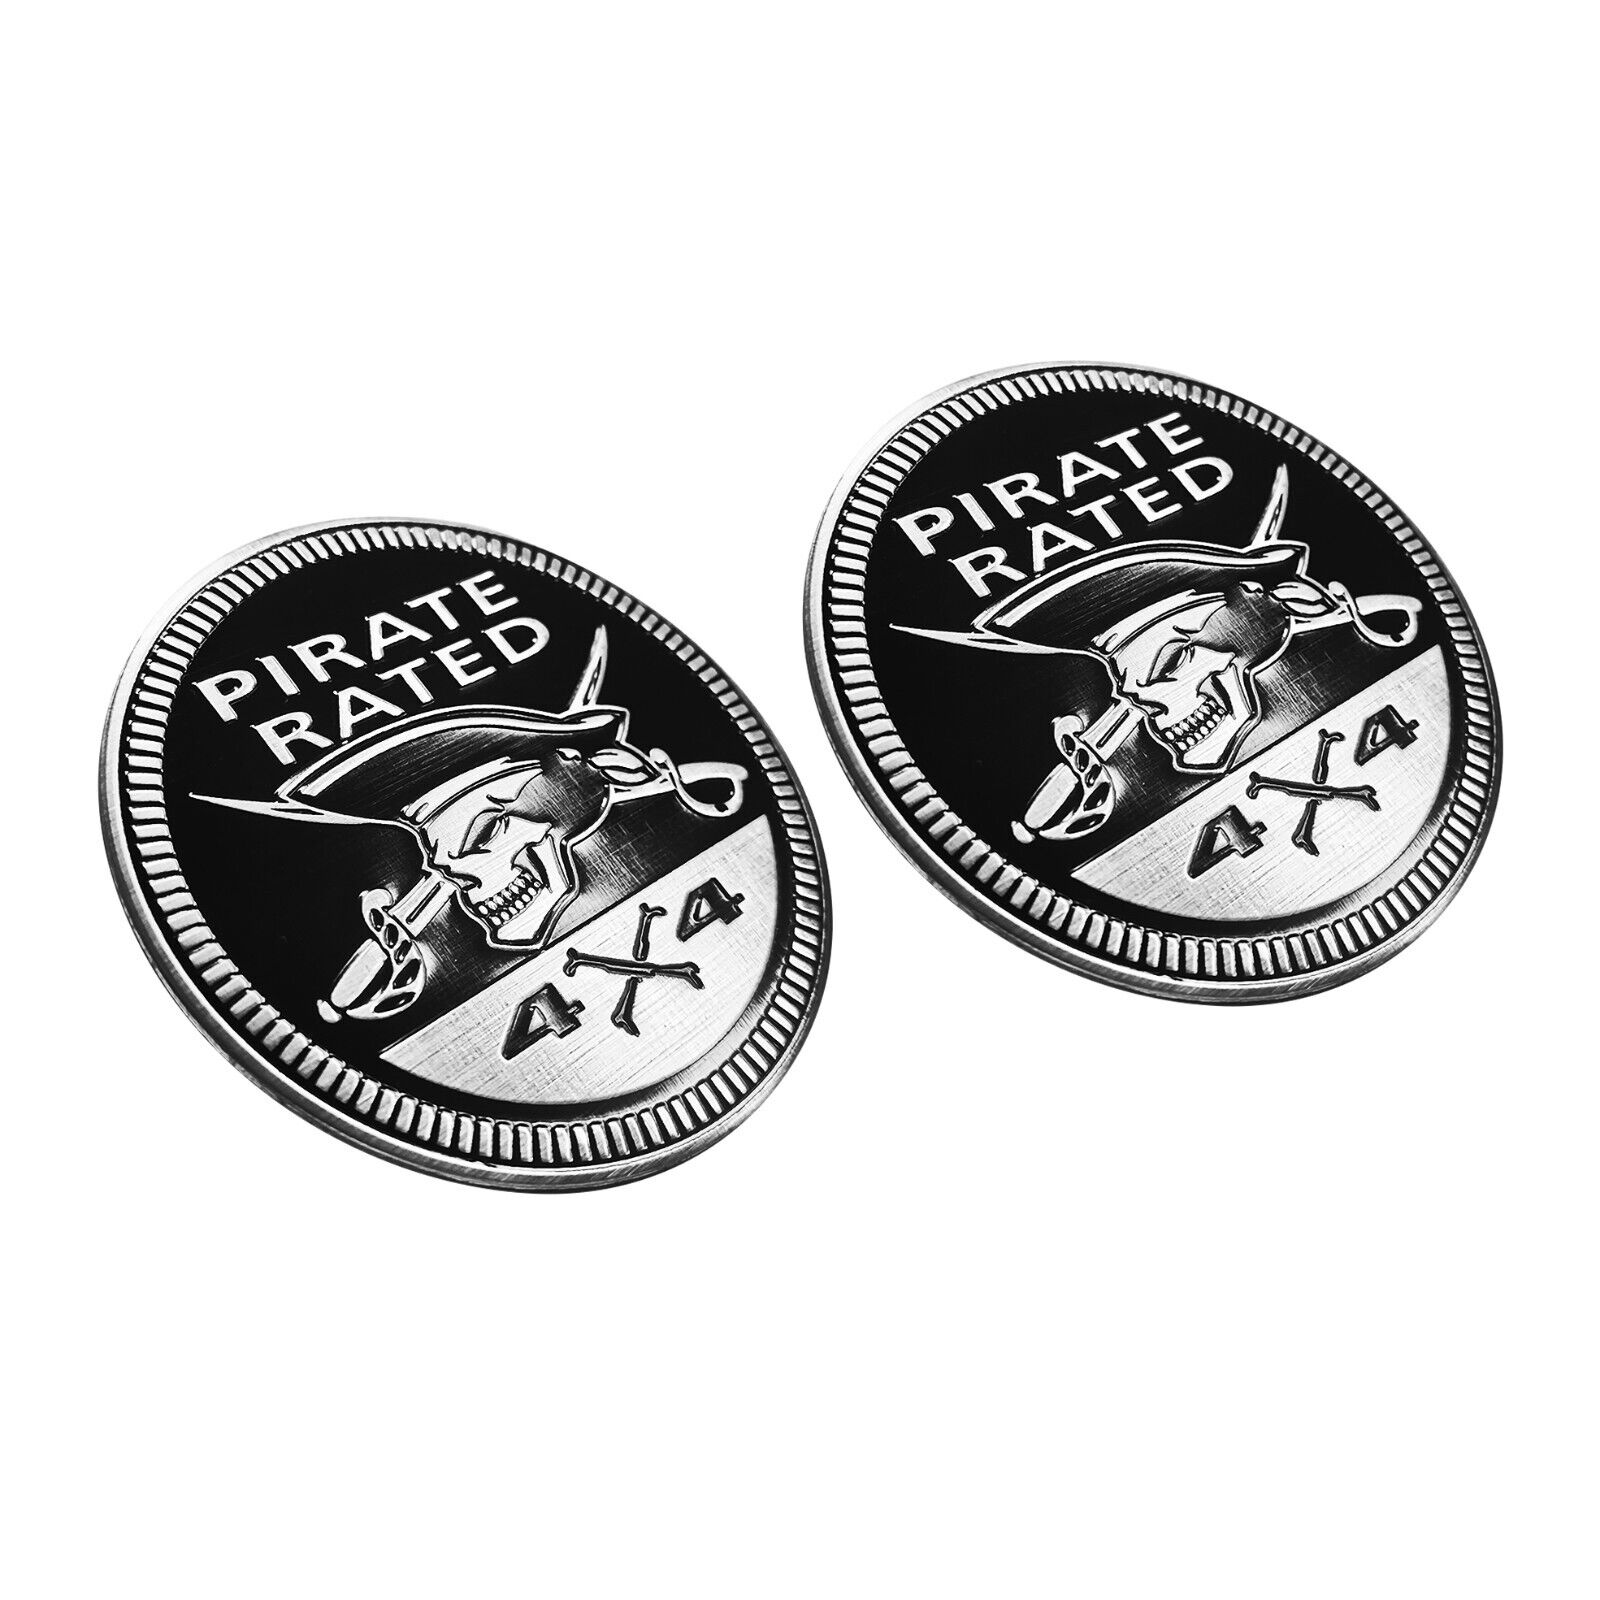 Pirate Rated 4x4 Hawaii Emblem Badge For Wrangler Cherokee JK Adhesive 3D Decals